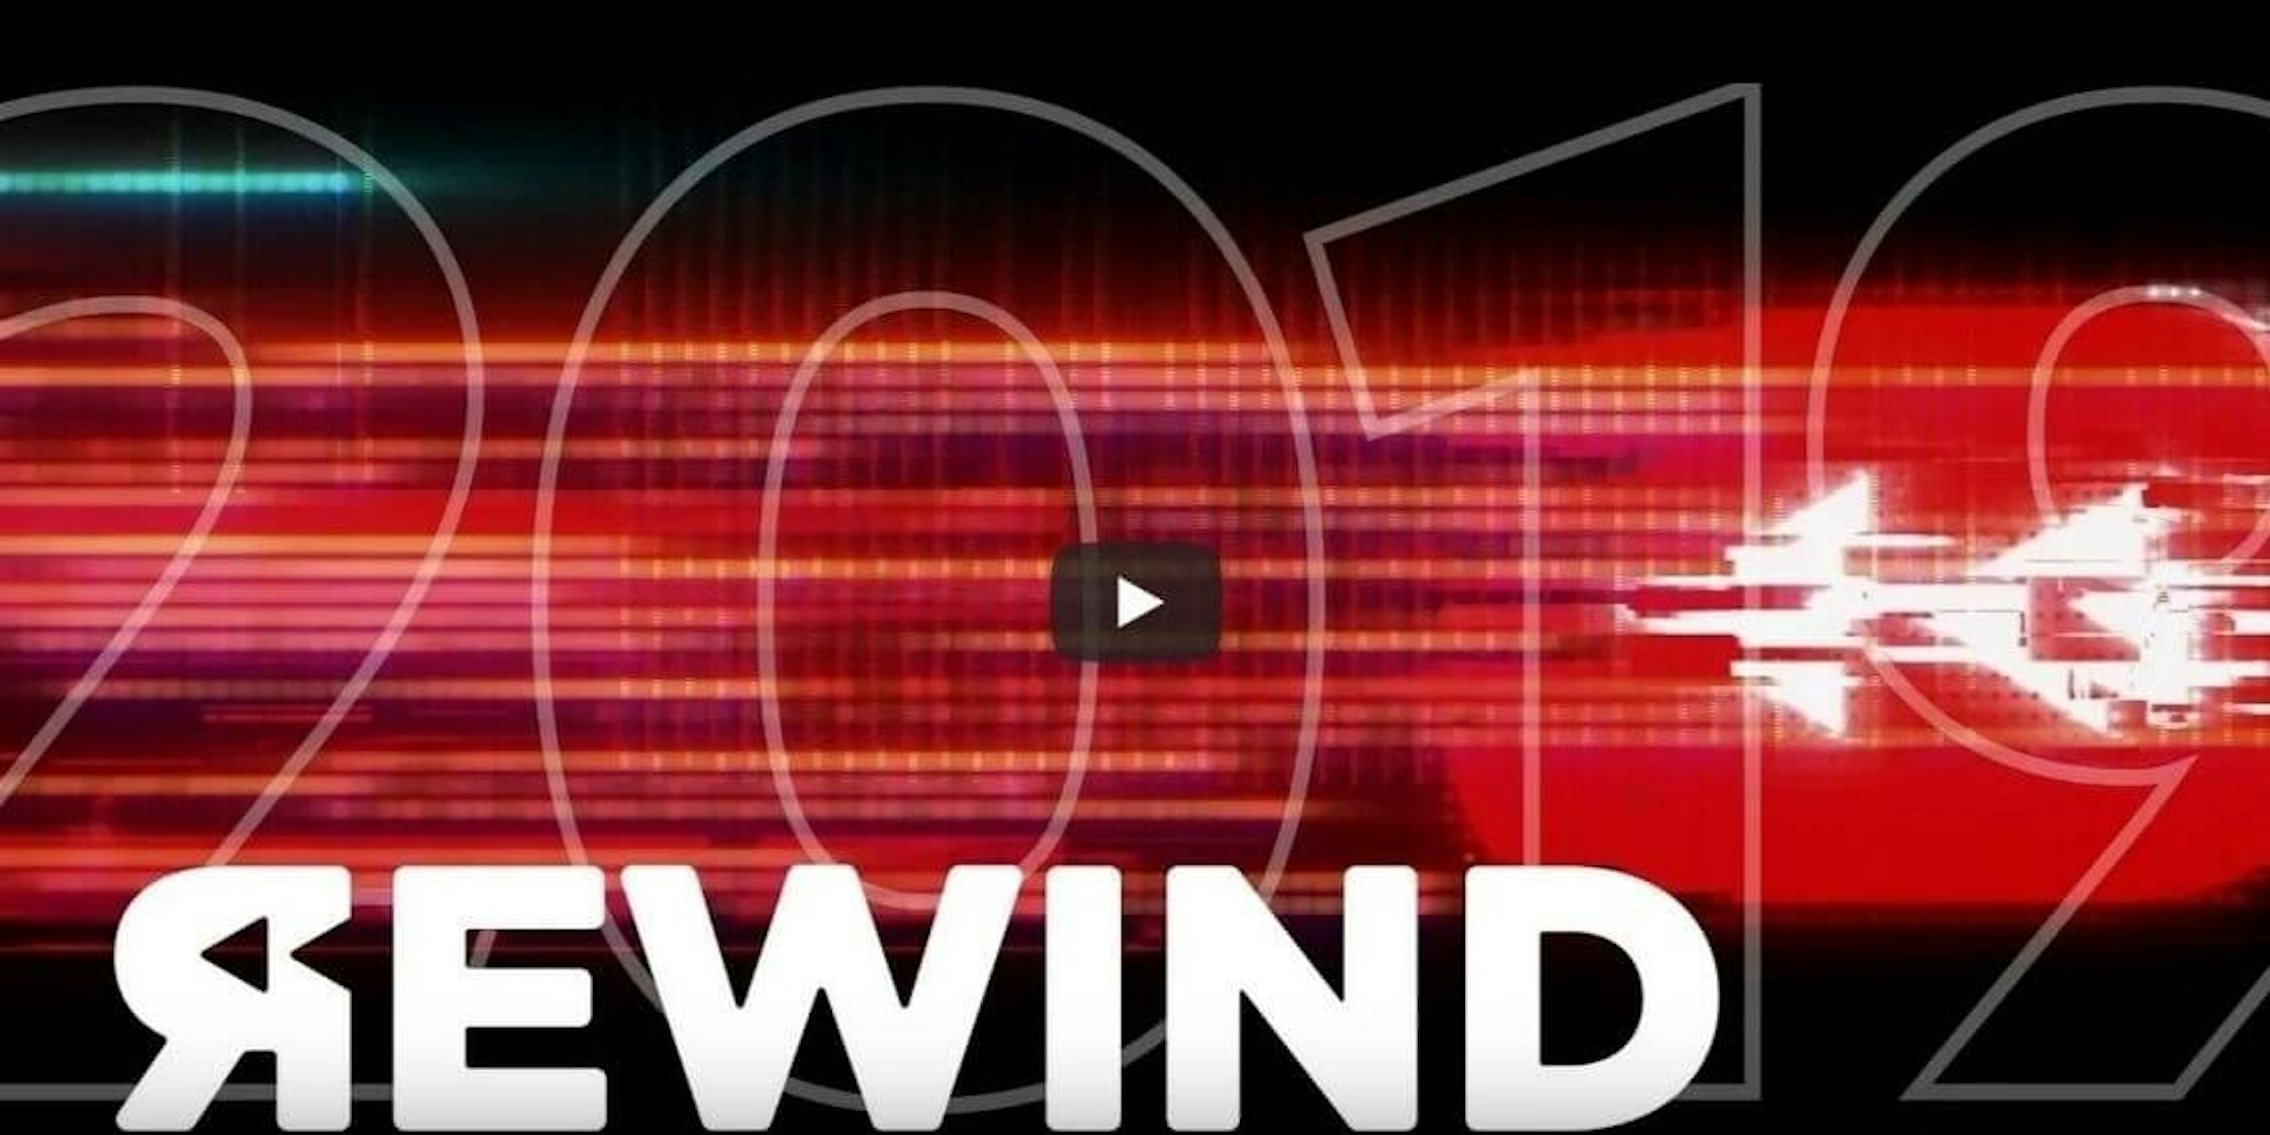 YouTube Rewind 2019 video